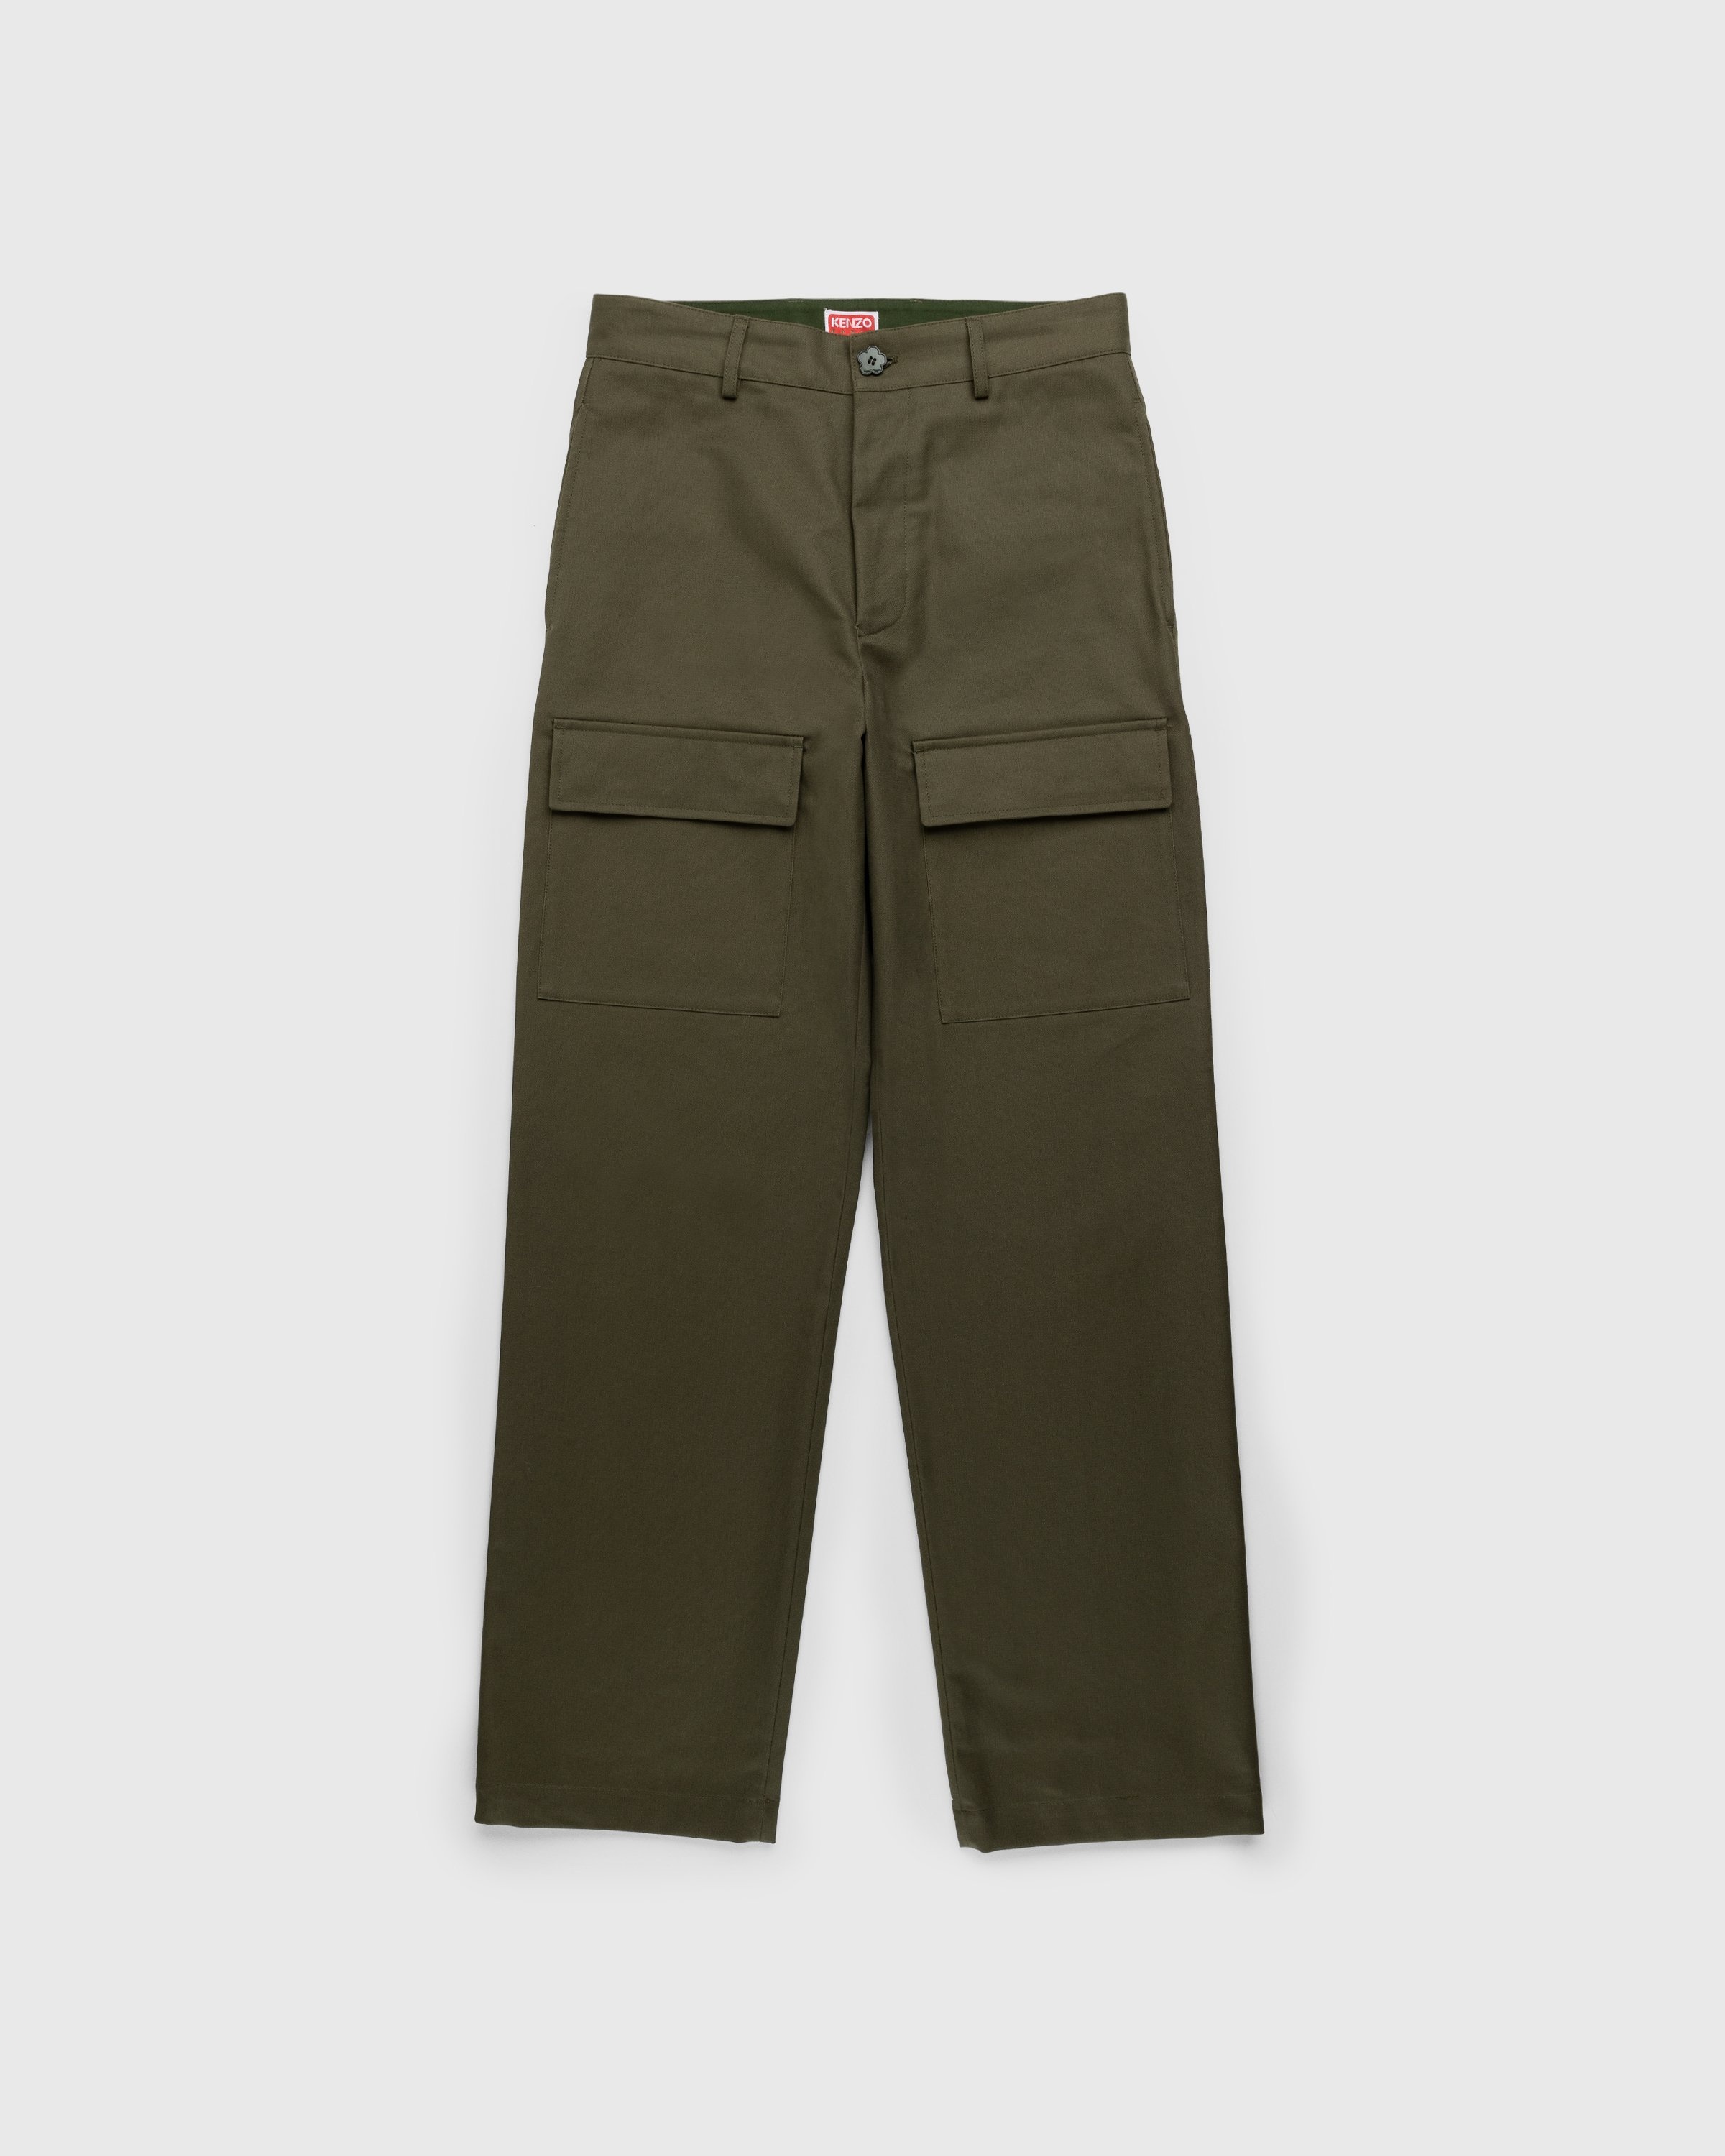 Kenzo – Tailored Pants Dark Khaki - Cargo Pants - Green - Image 1